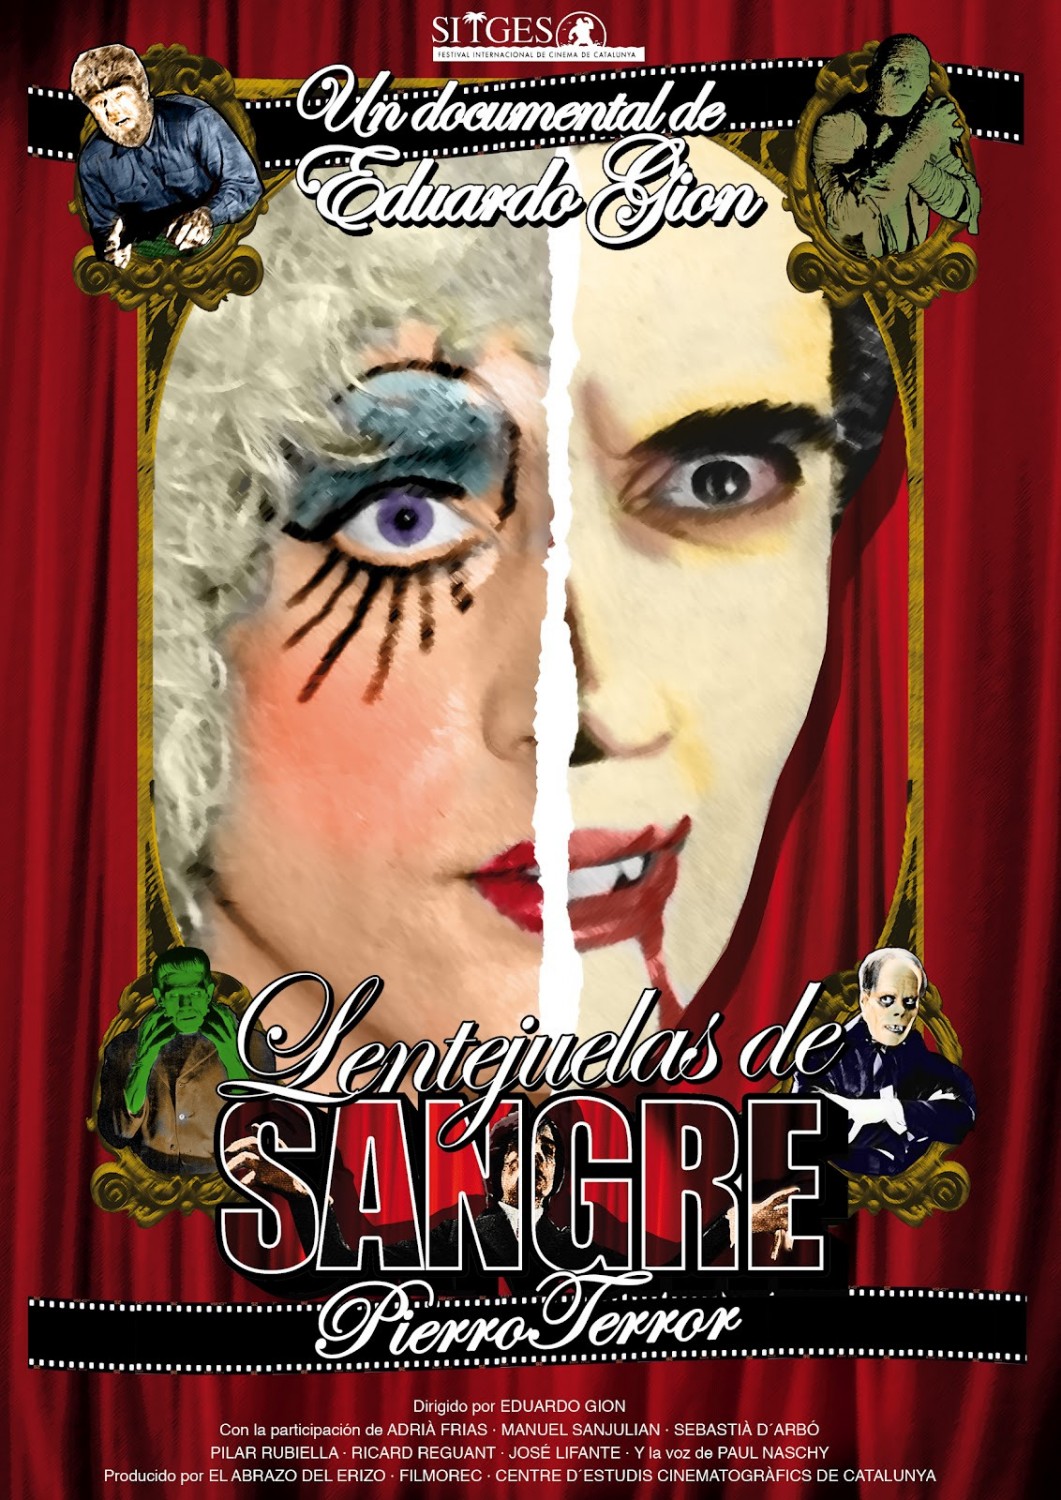 Extra Large Movie Poster Image for Lentejuelas de sangre 